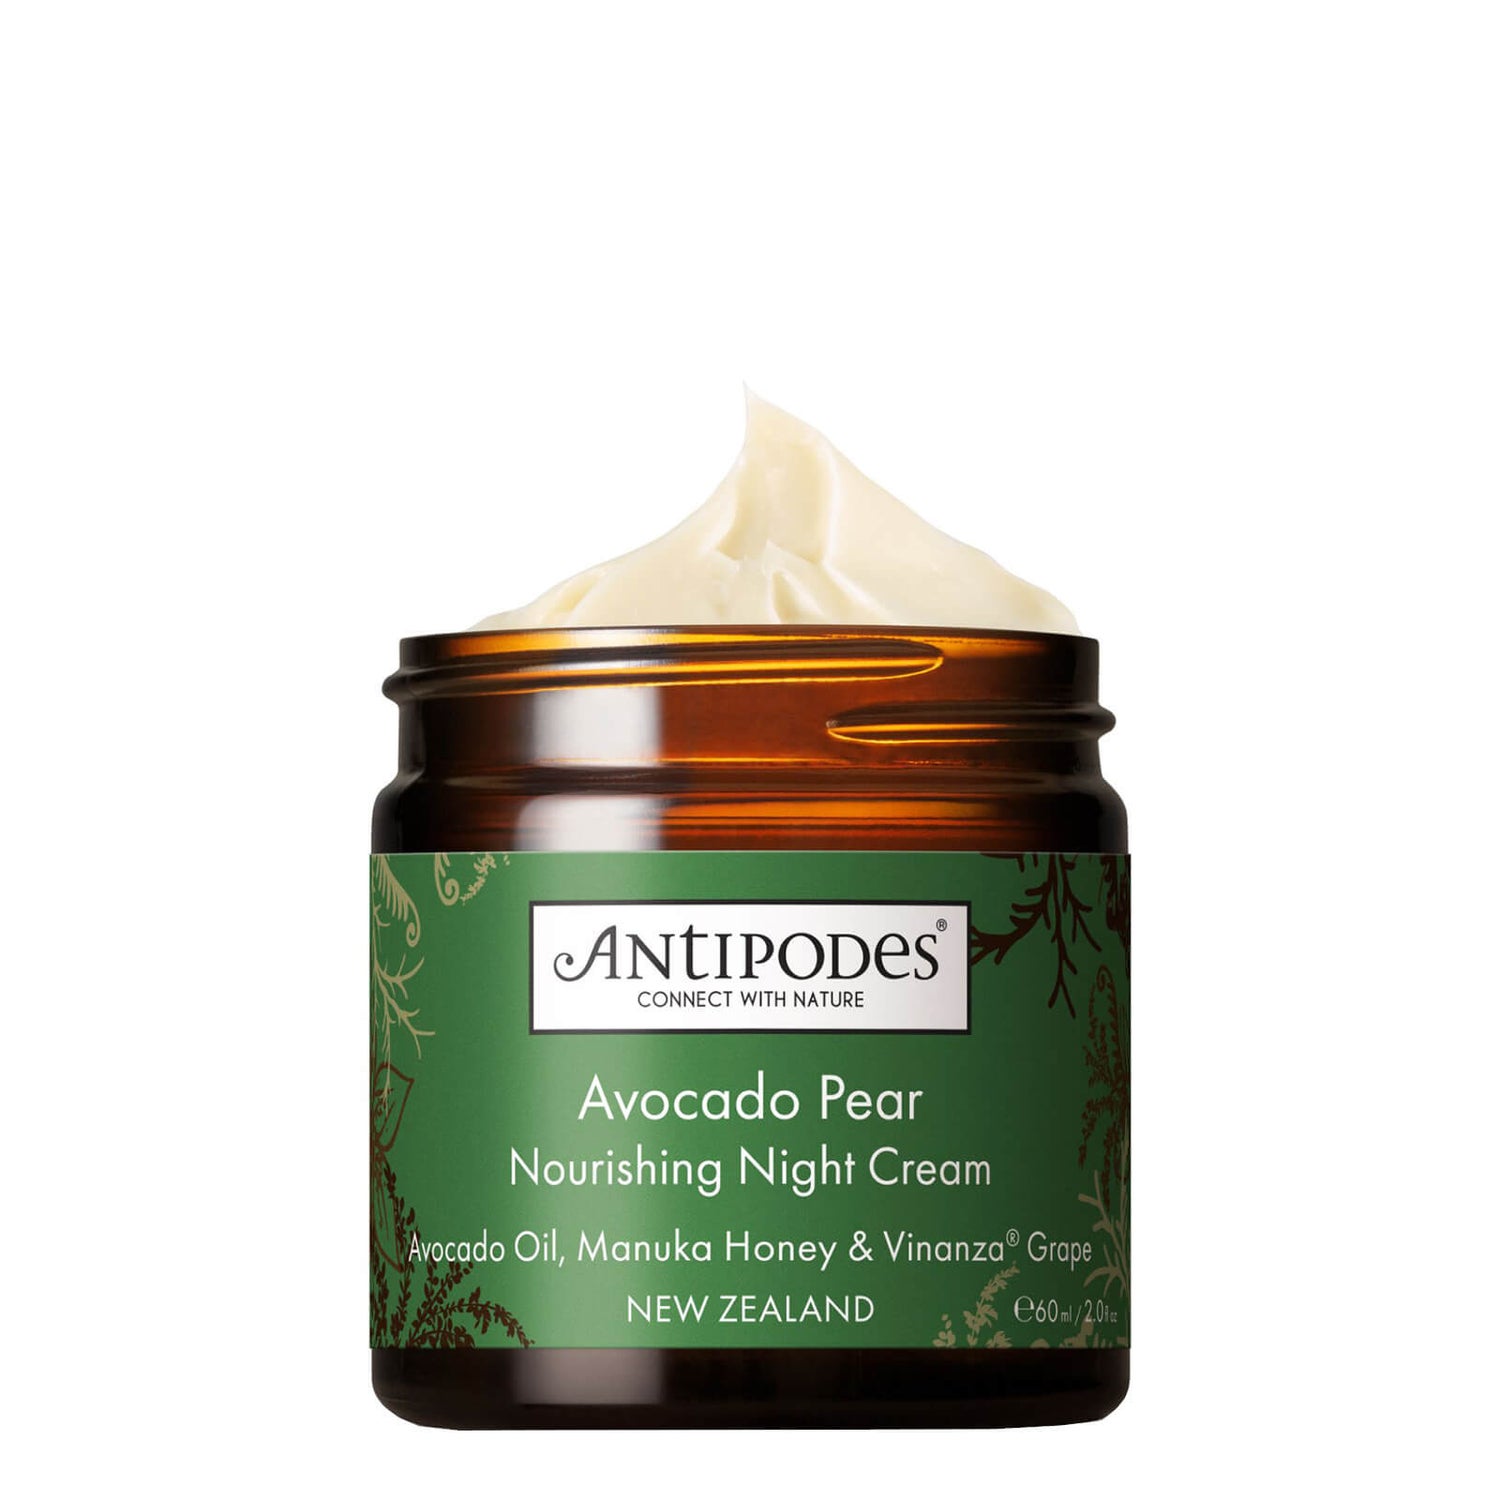 Antipodes Avocado Pear Nourishing Night Cream(앤티퍼디 아보카도 페어 너리싱 나이트 크림 60ml)